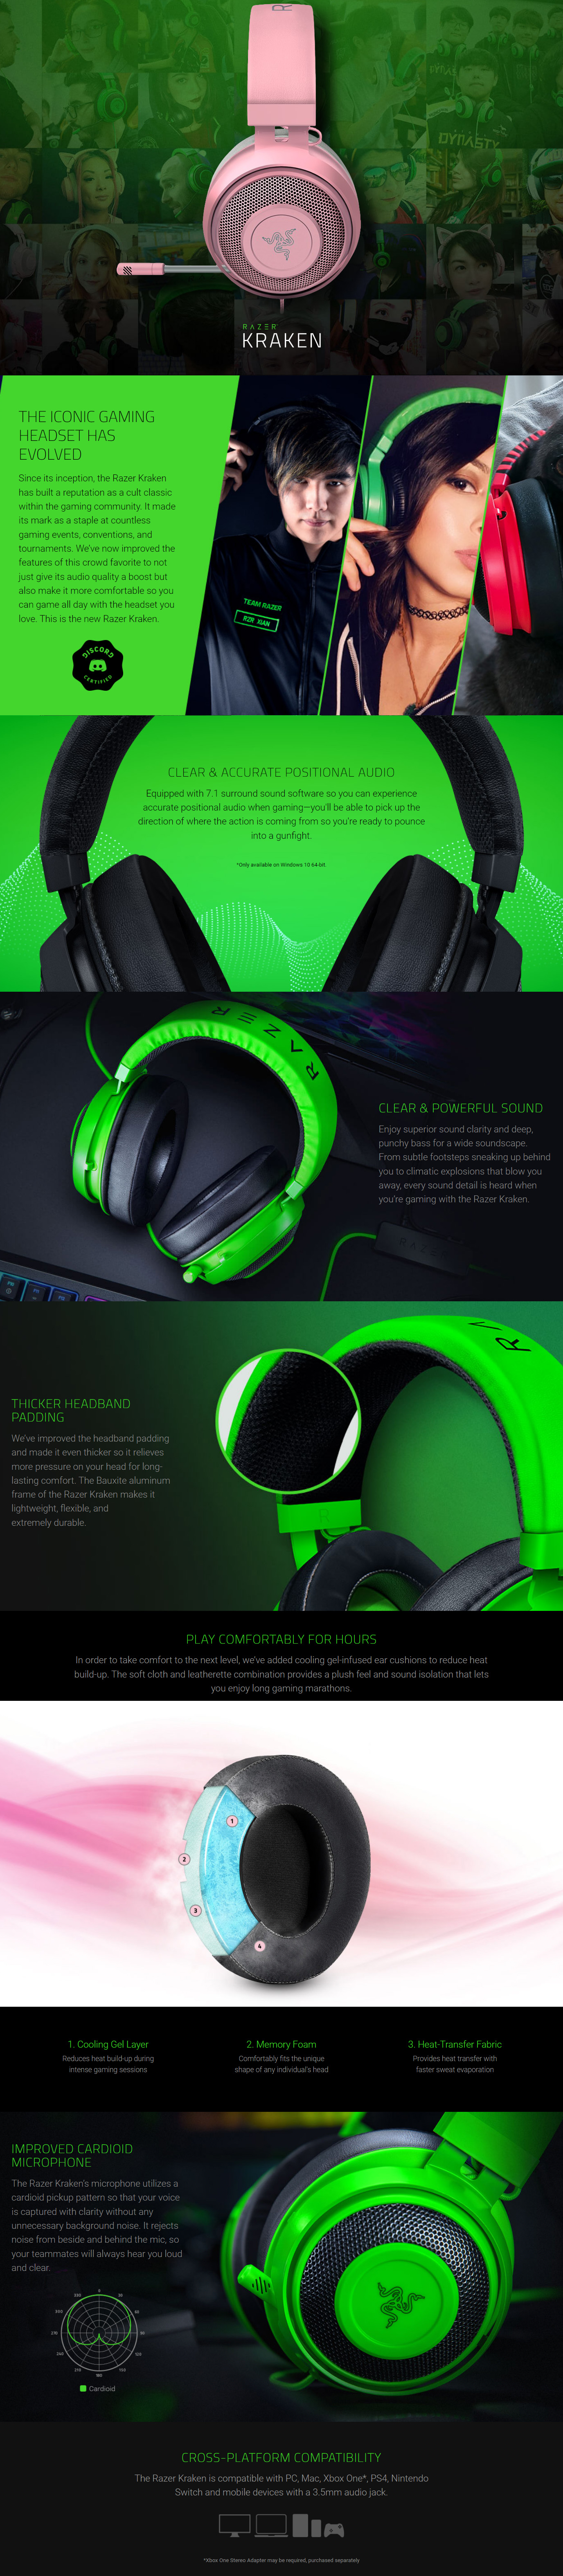 Headphones-Razer-Kraken-Multi-Platform-Wired-Gaming-Headset-Quartz-1